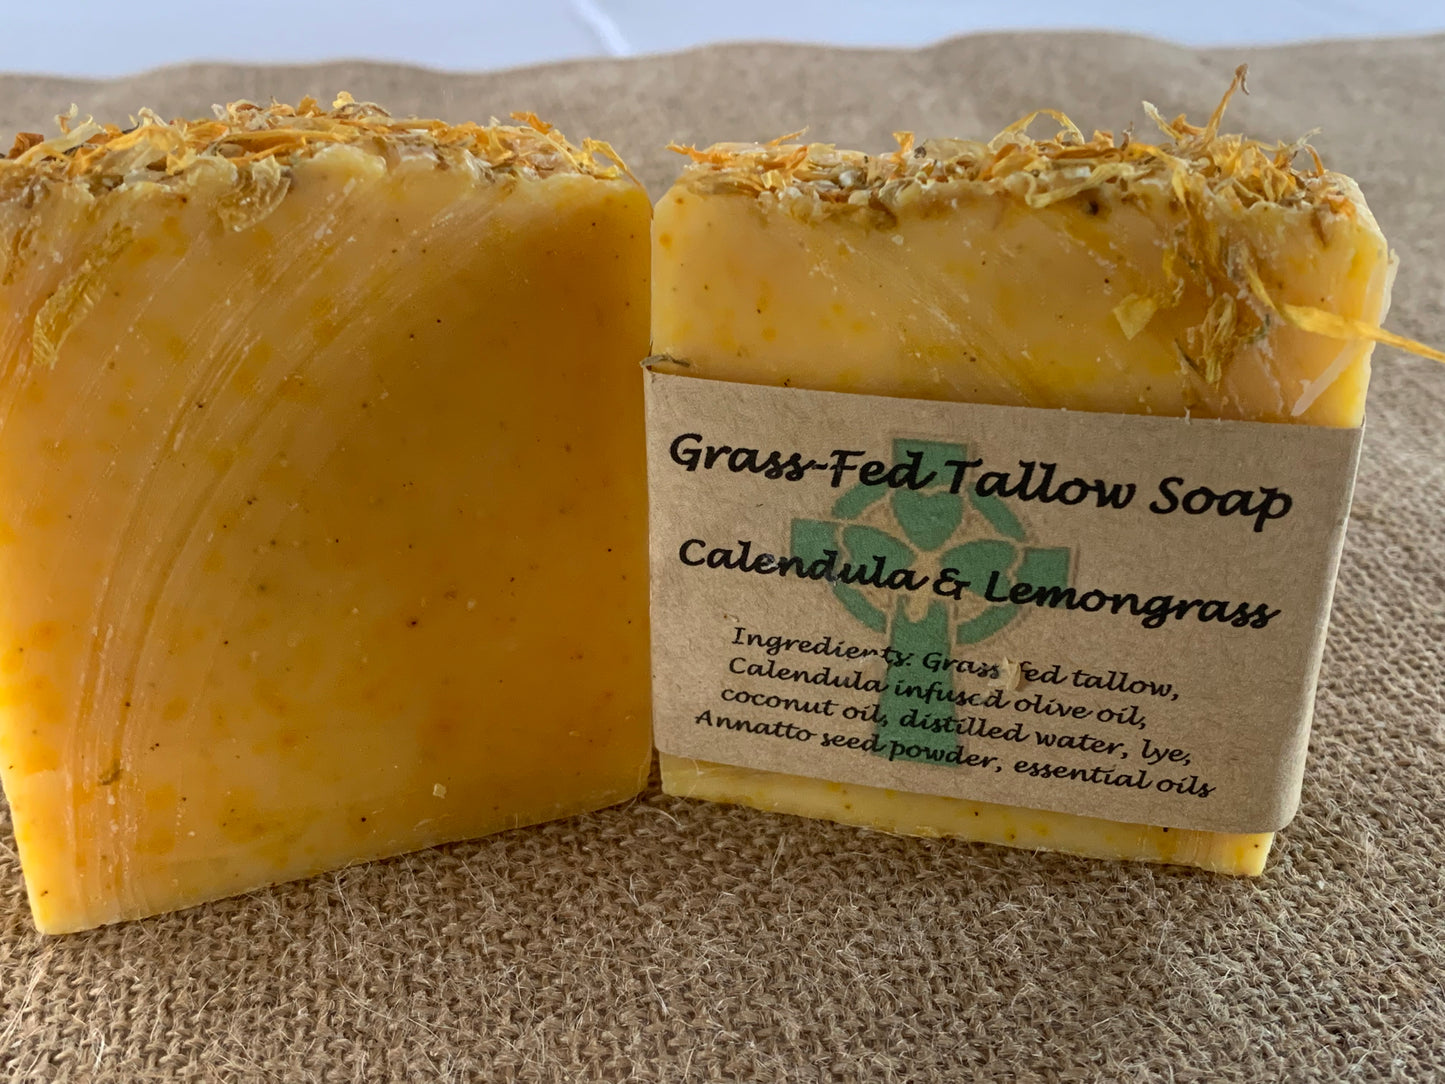 Calendula and Lemongrass Grass-Fed Tallow Soap hi